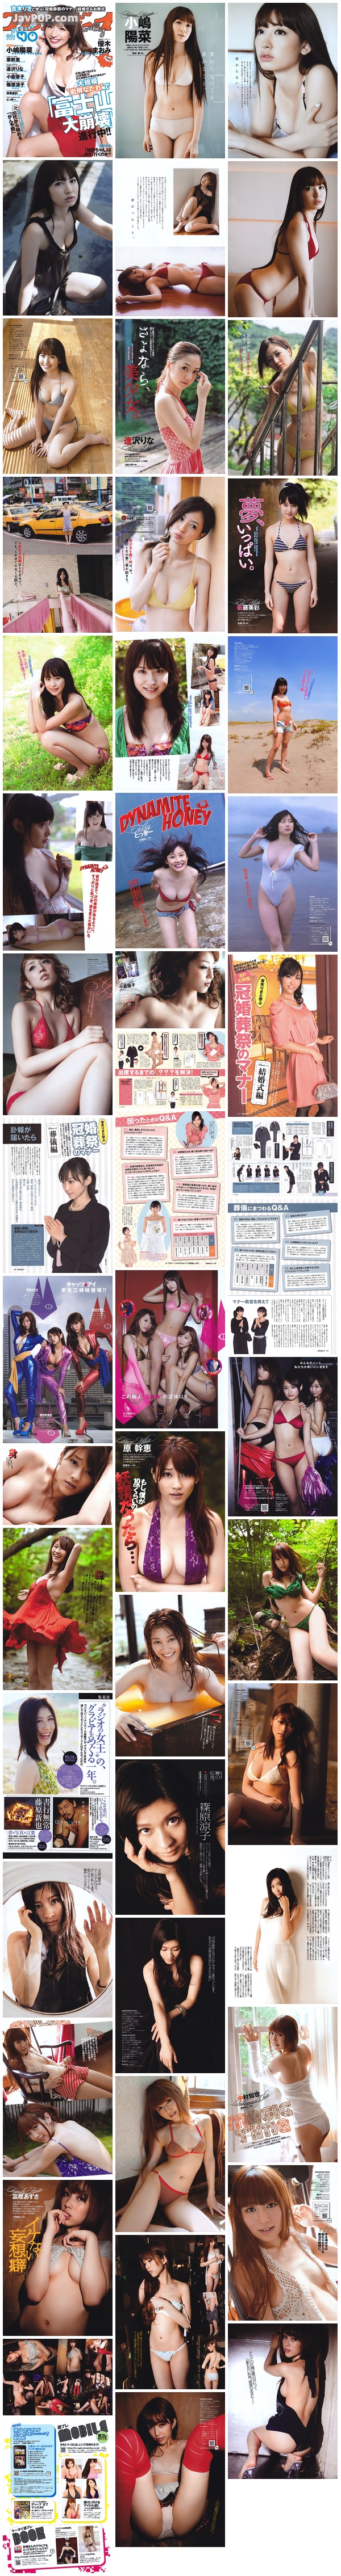 [Weekly_Playboy_Magazine] 2011 No.40 小嶋陽菜 逢沢りな 小倉優子 吉木りさ 原幹恵 富樫あずさ